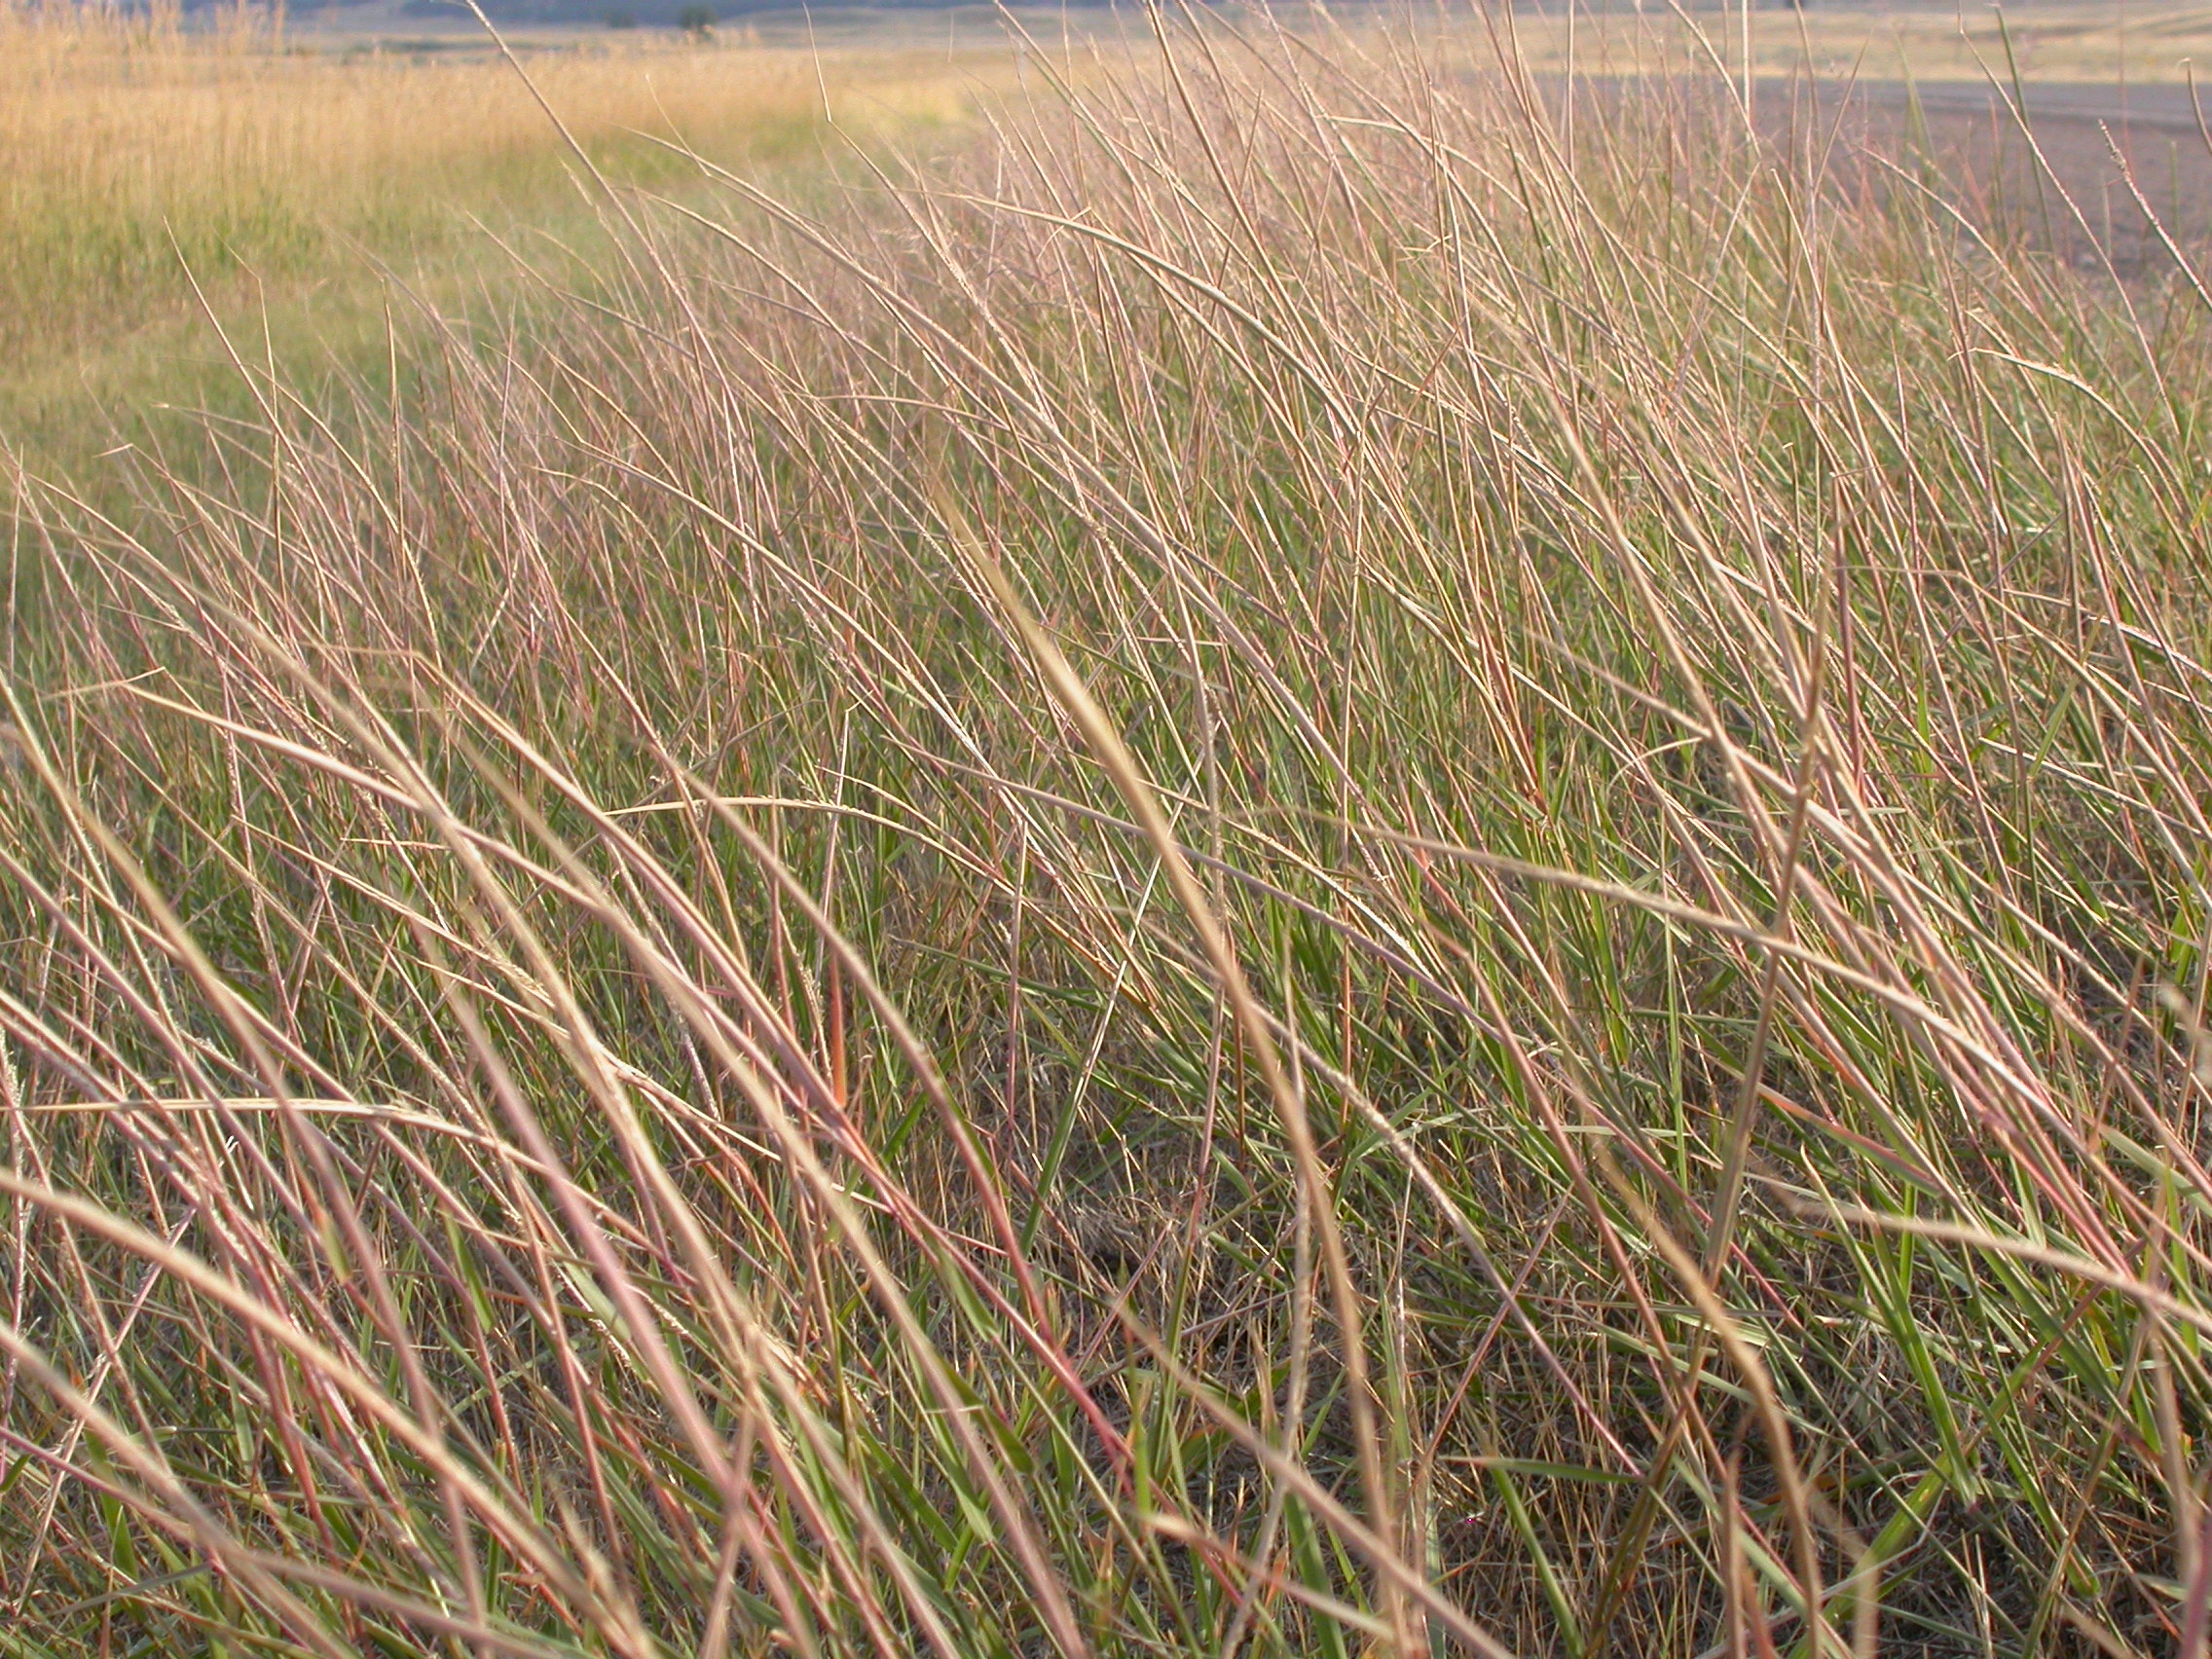 Grassland habitat with sand dropseed in situ displaying a slightly reddish tinge